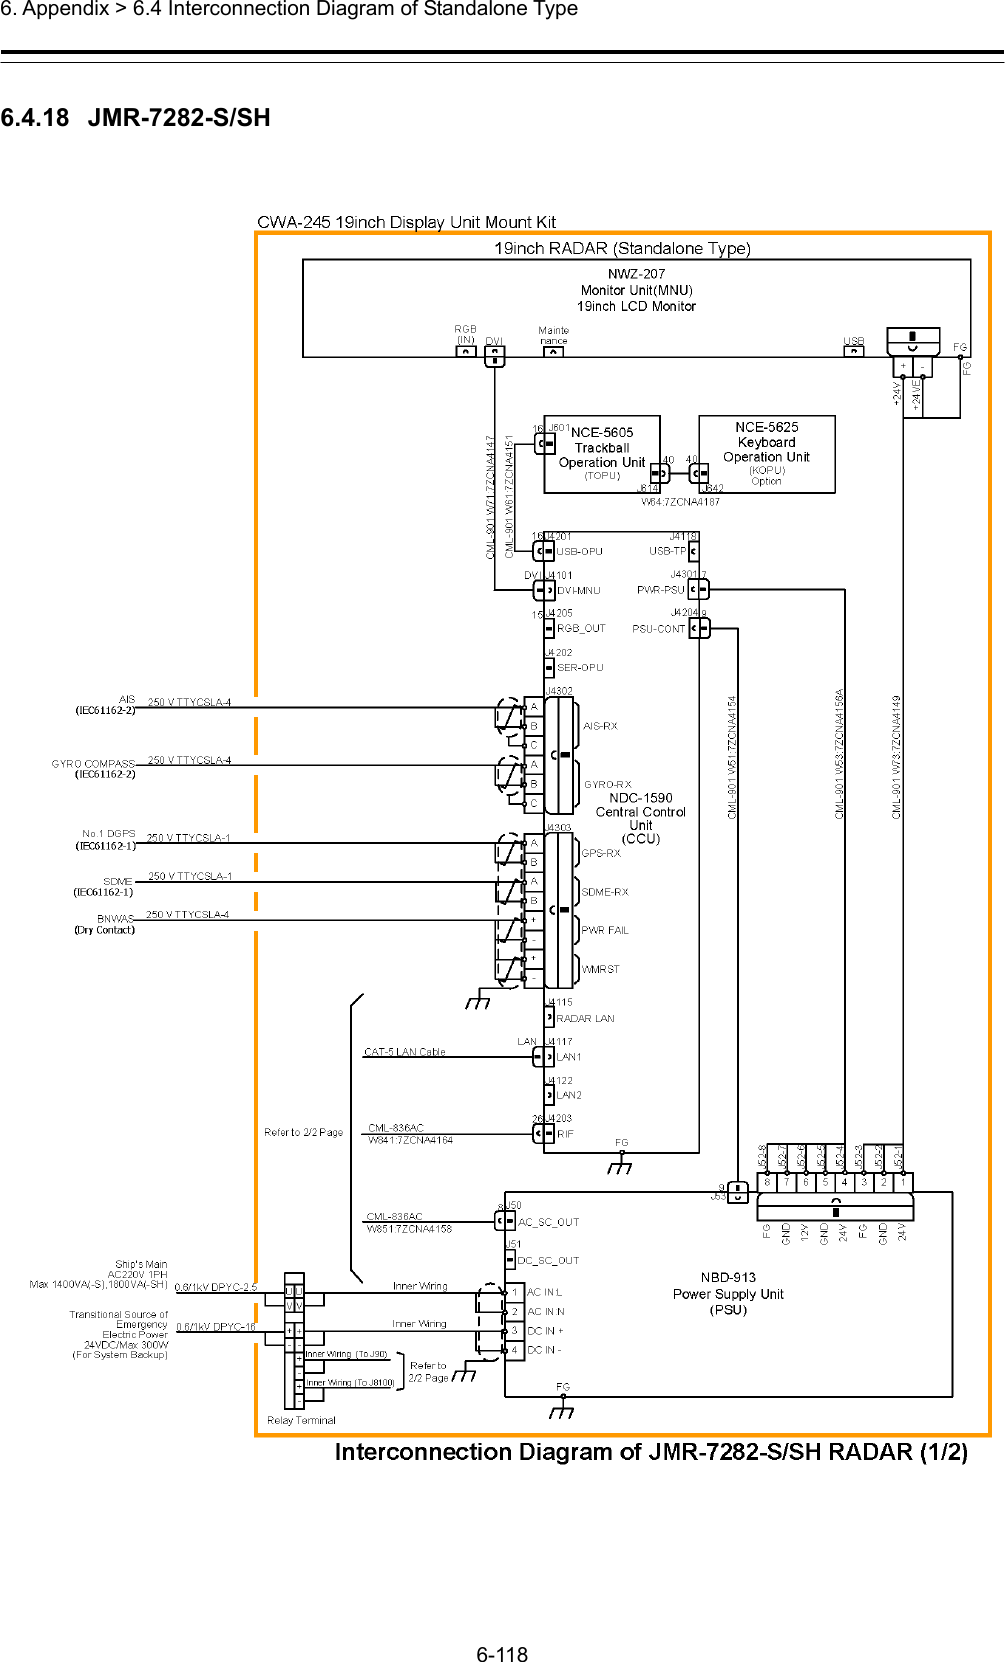  6. Appendix &gt; 6.4 Interconnection Diagram of Standalone Type 6-118  6.4.18  JMR-7282-S/SH 